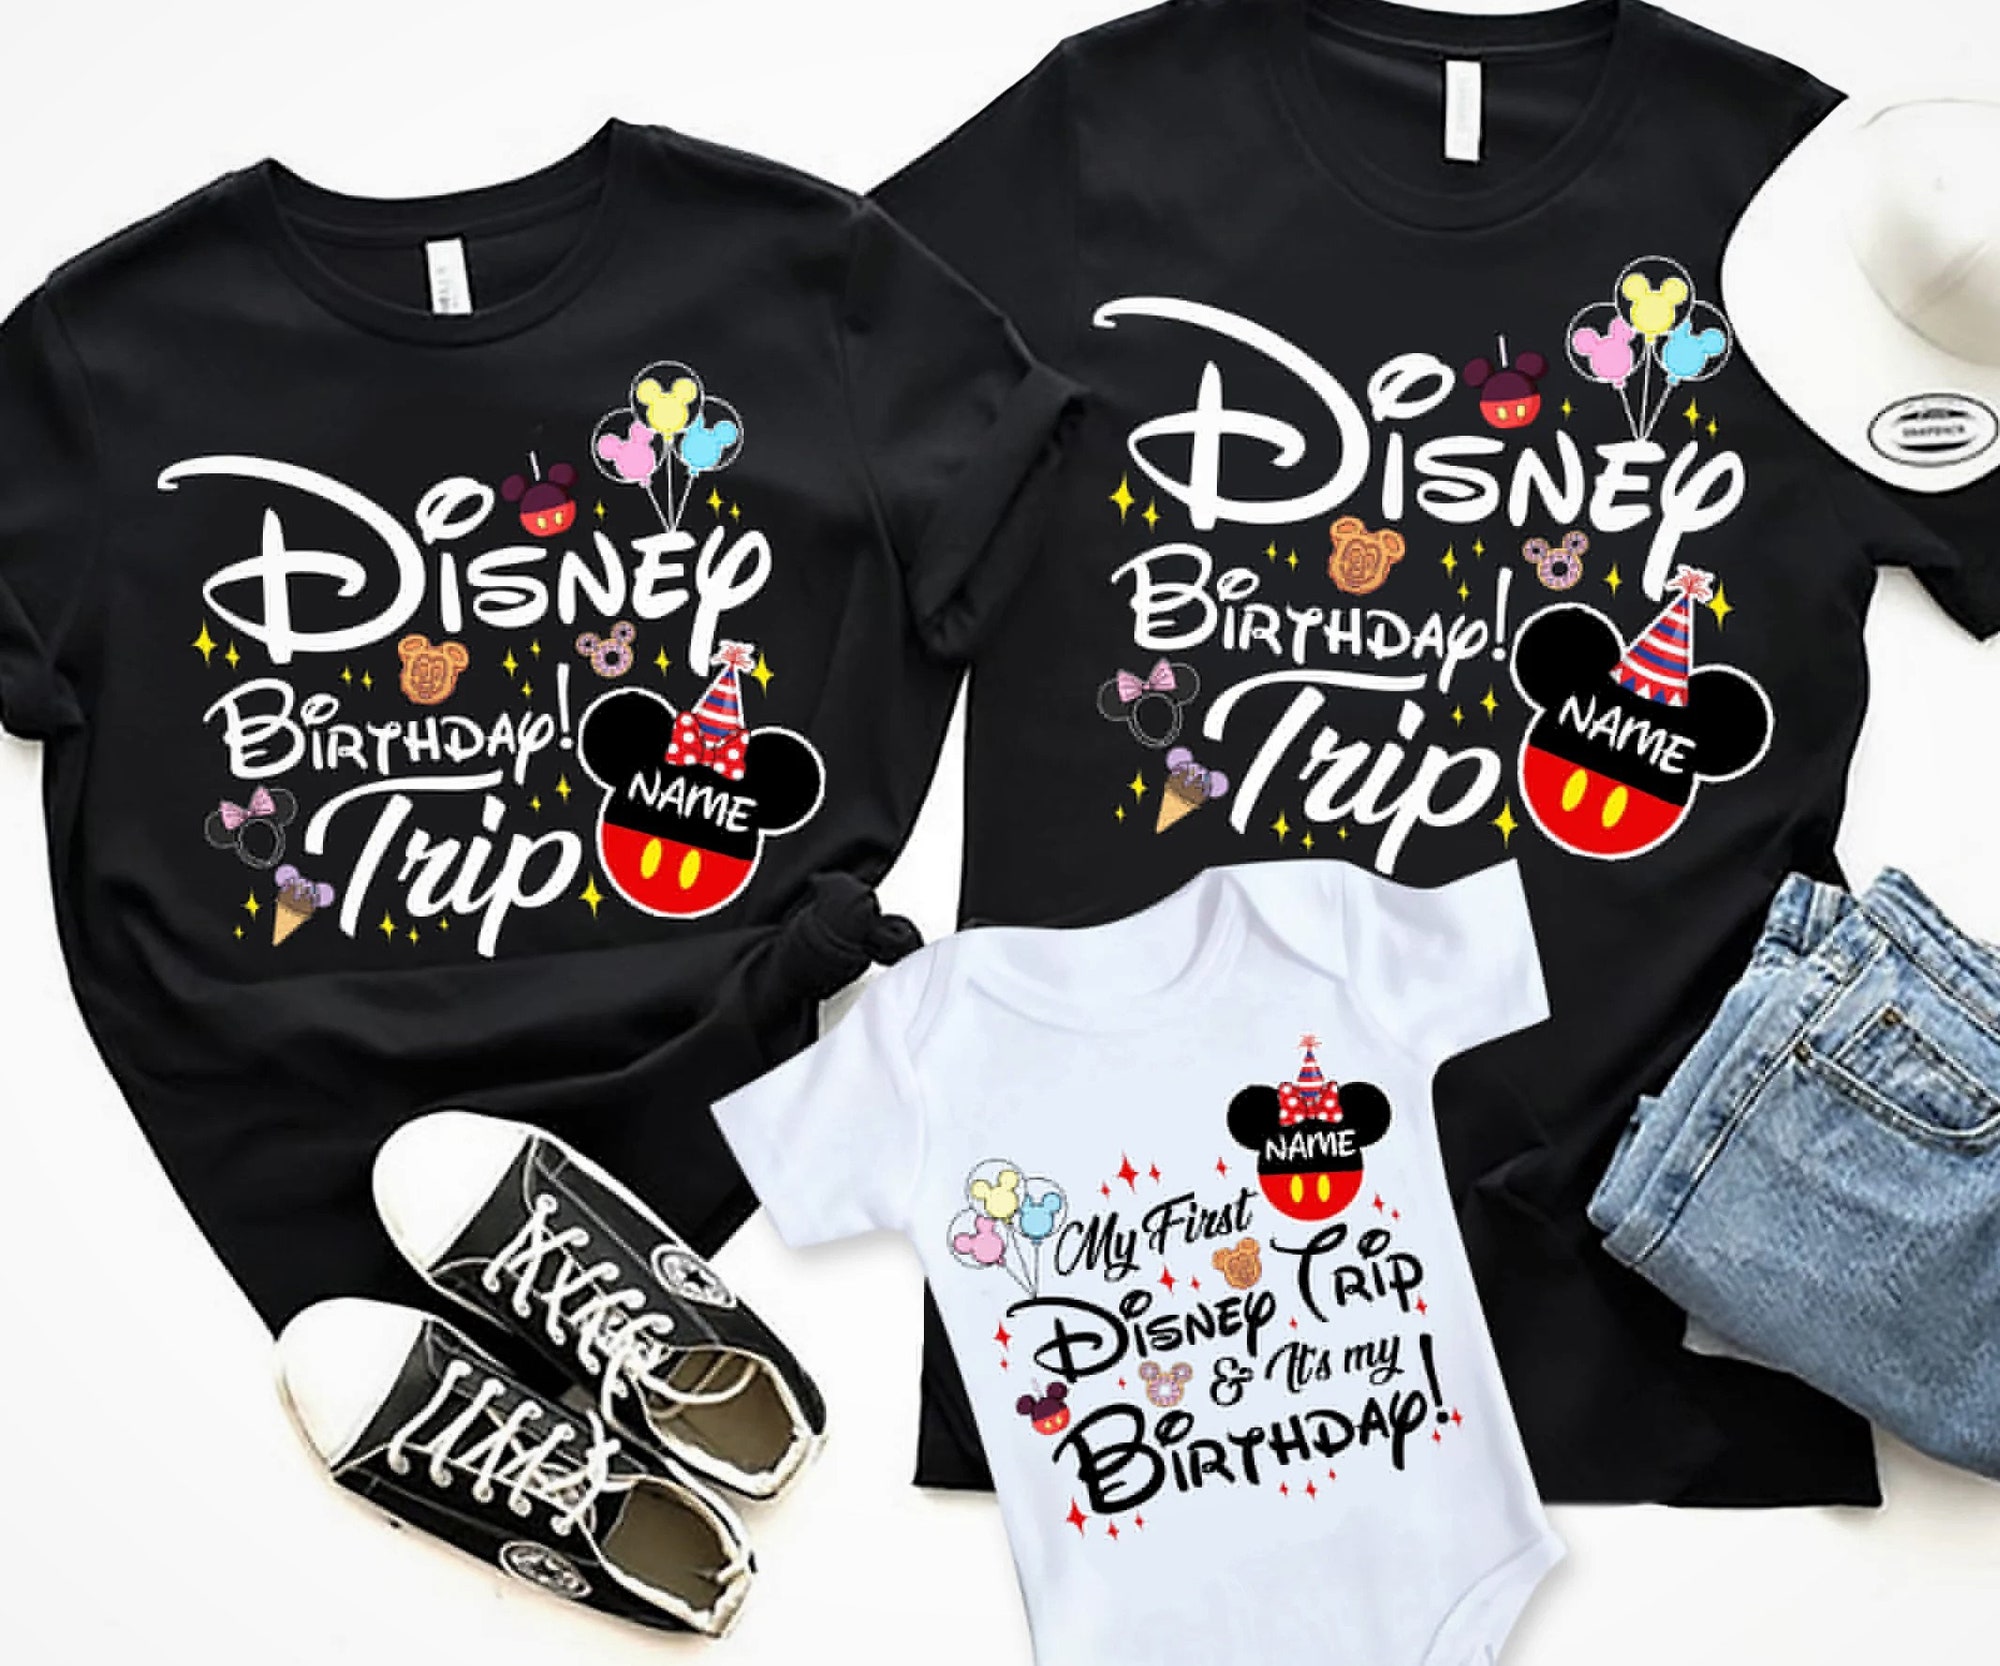 Discover Family Disney Birthday Trip, Disney Vacation Shirt, Disney Birthday Squad, Disney Birthday Trip